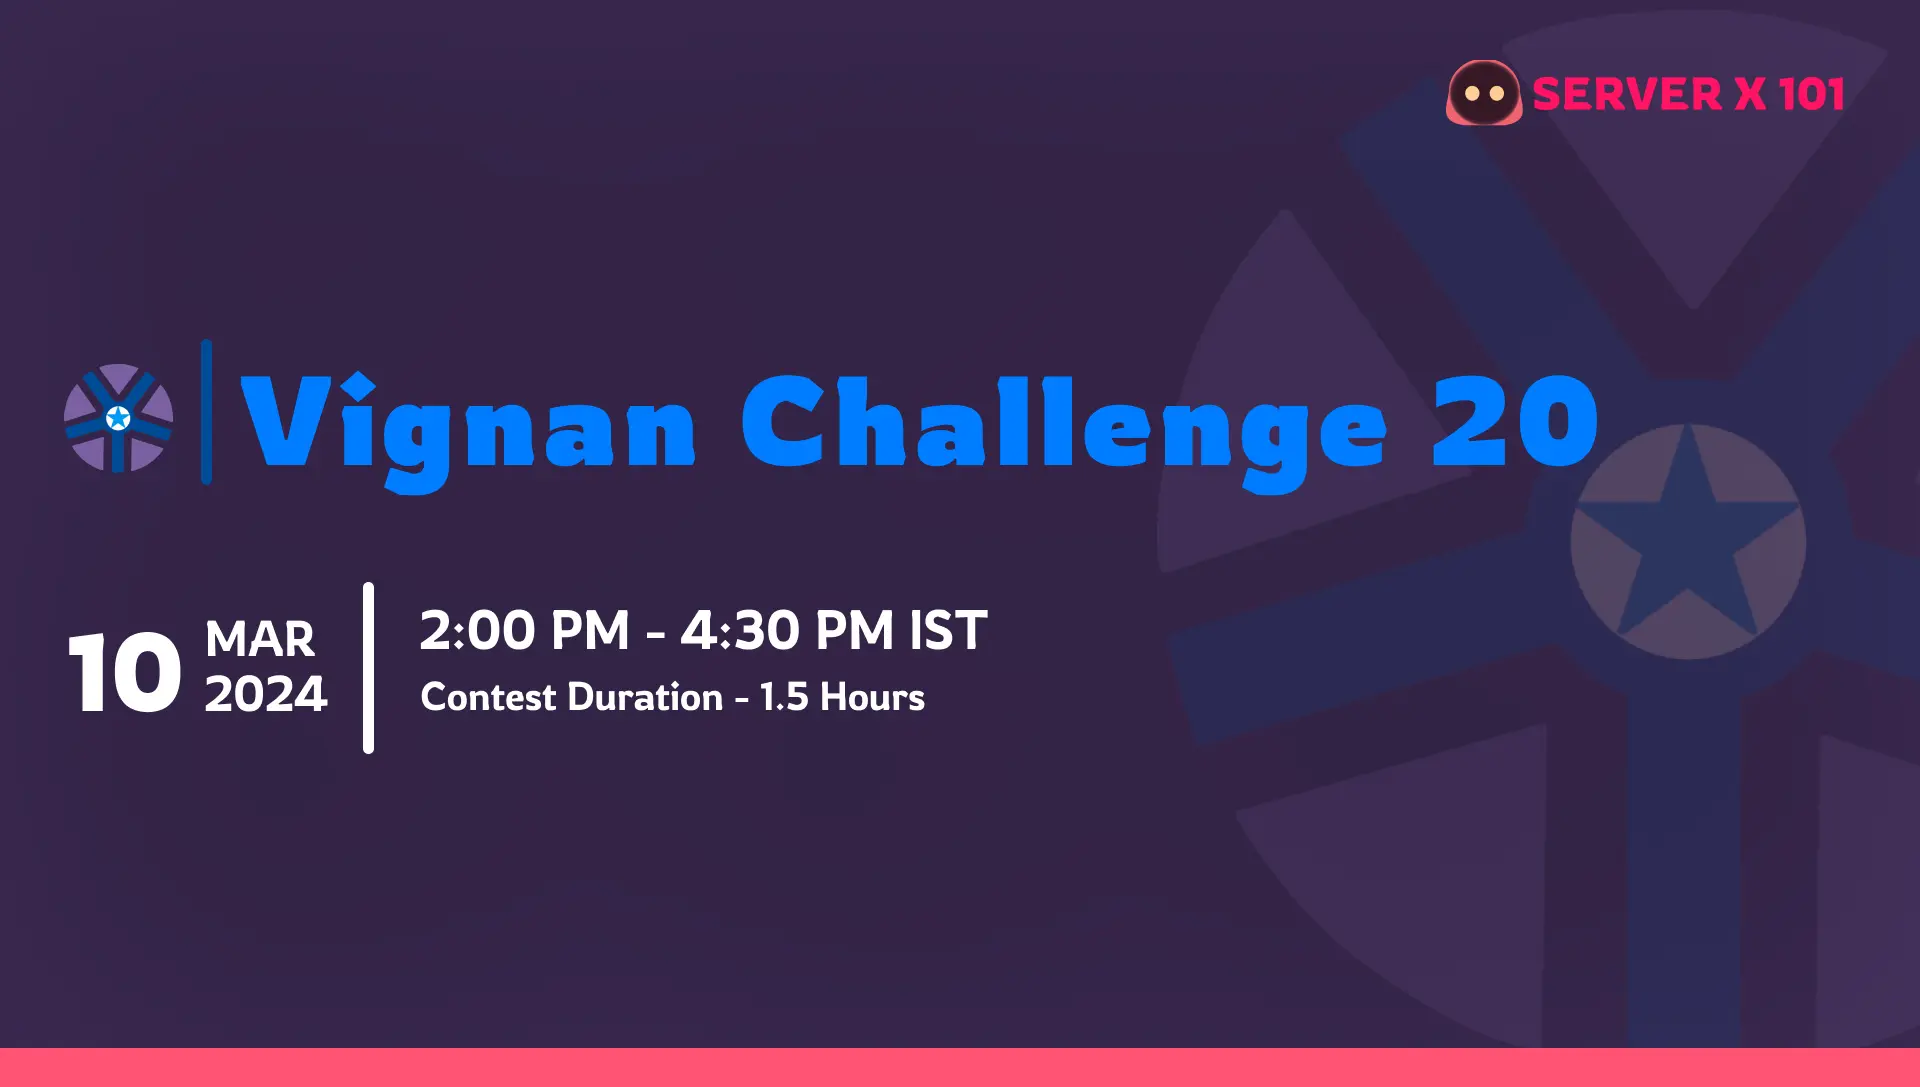 Vignan's Challenge 20